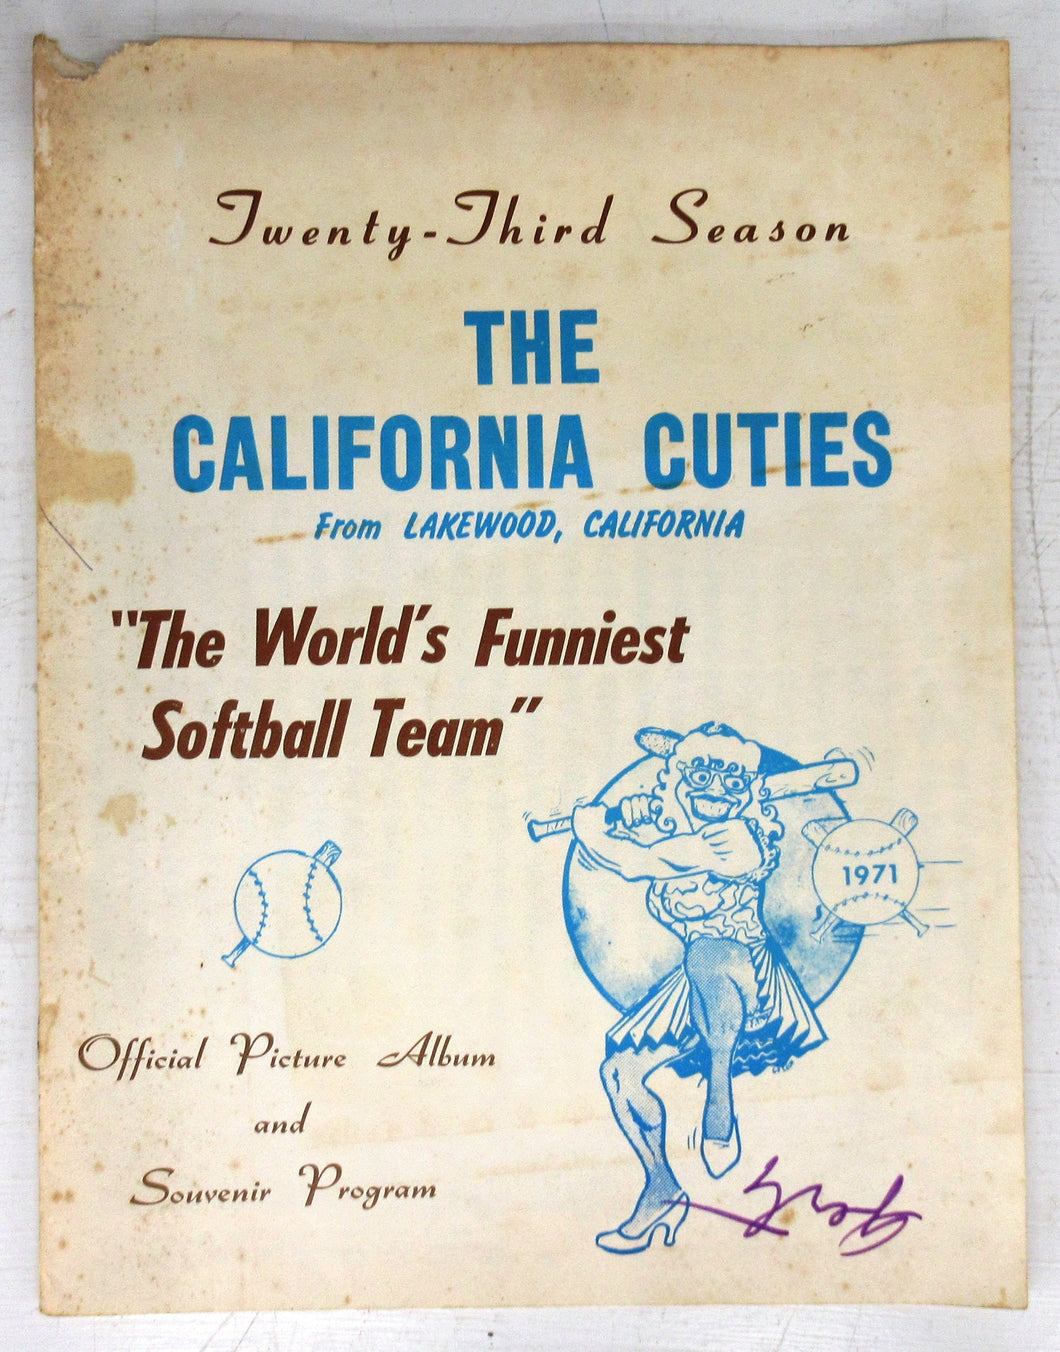 The California Cuties Official Picture Album and Souvenir Program